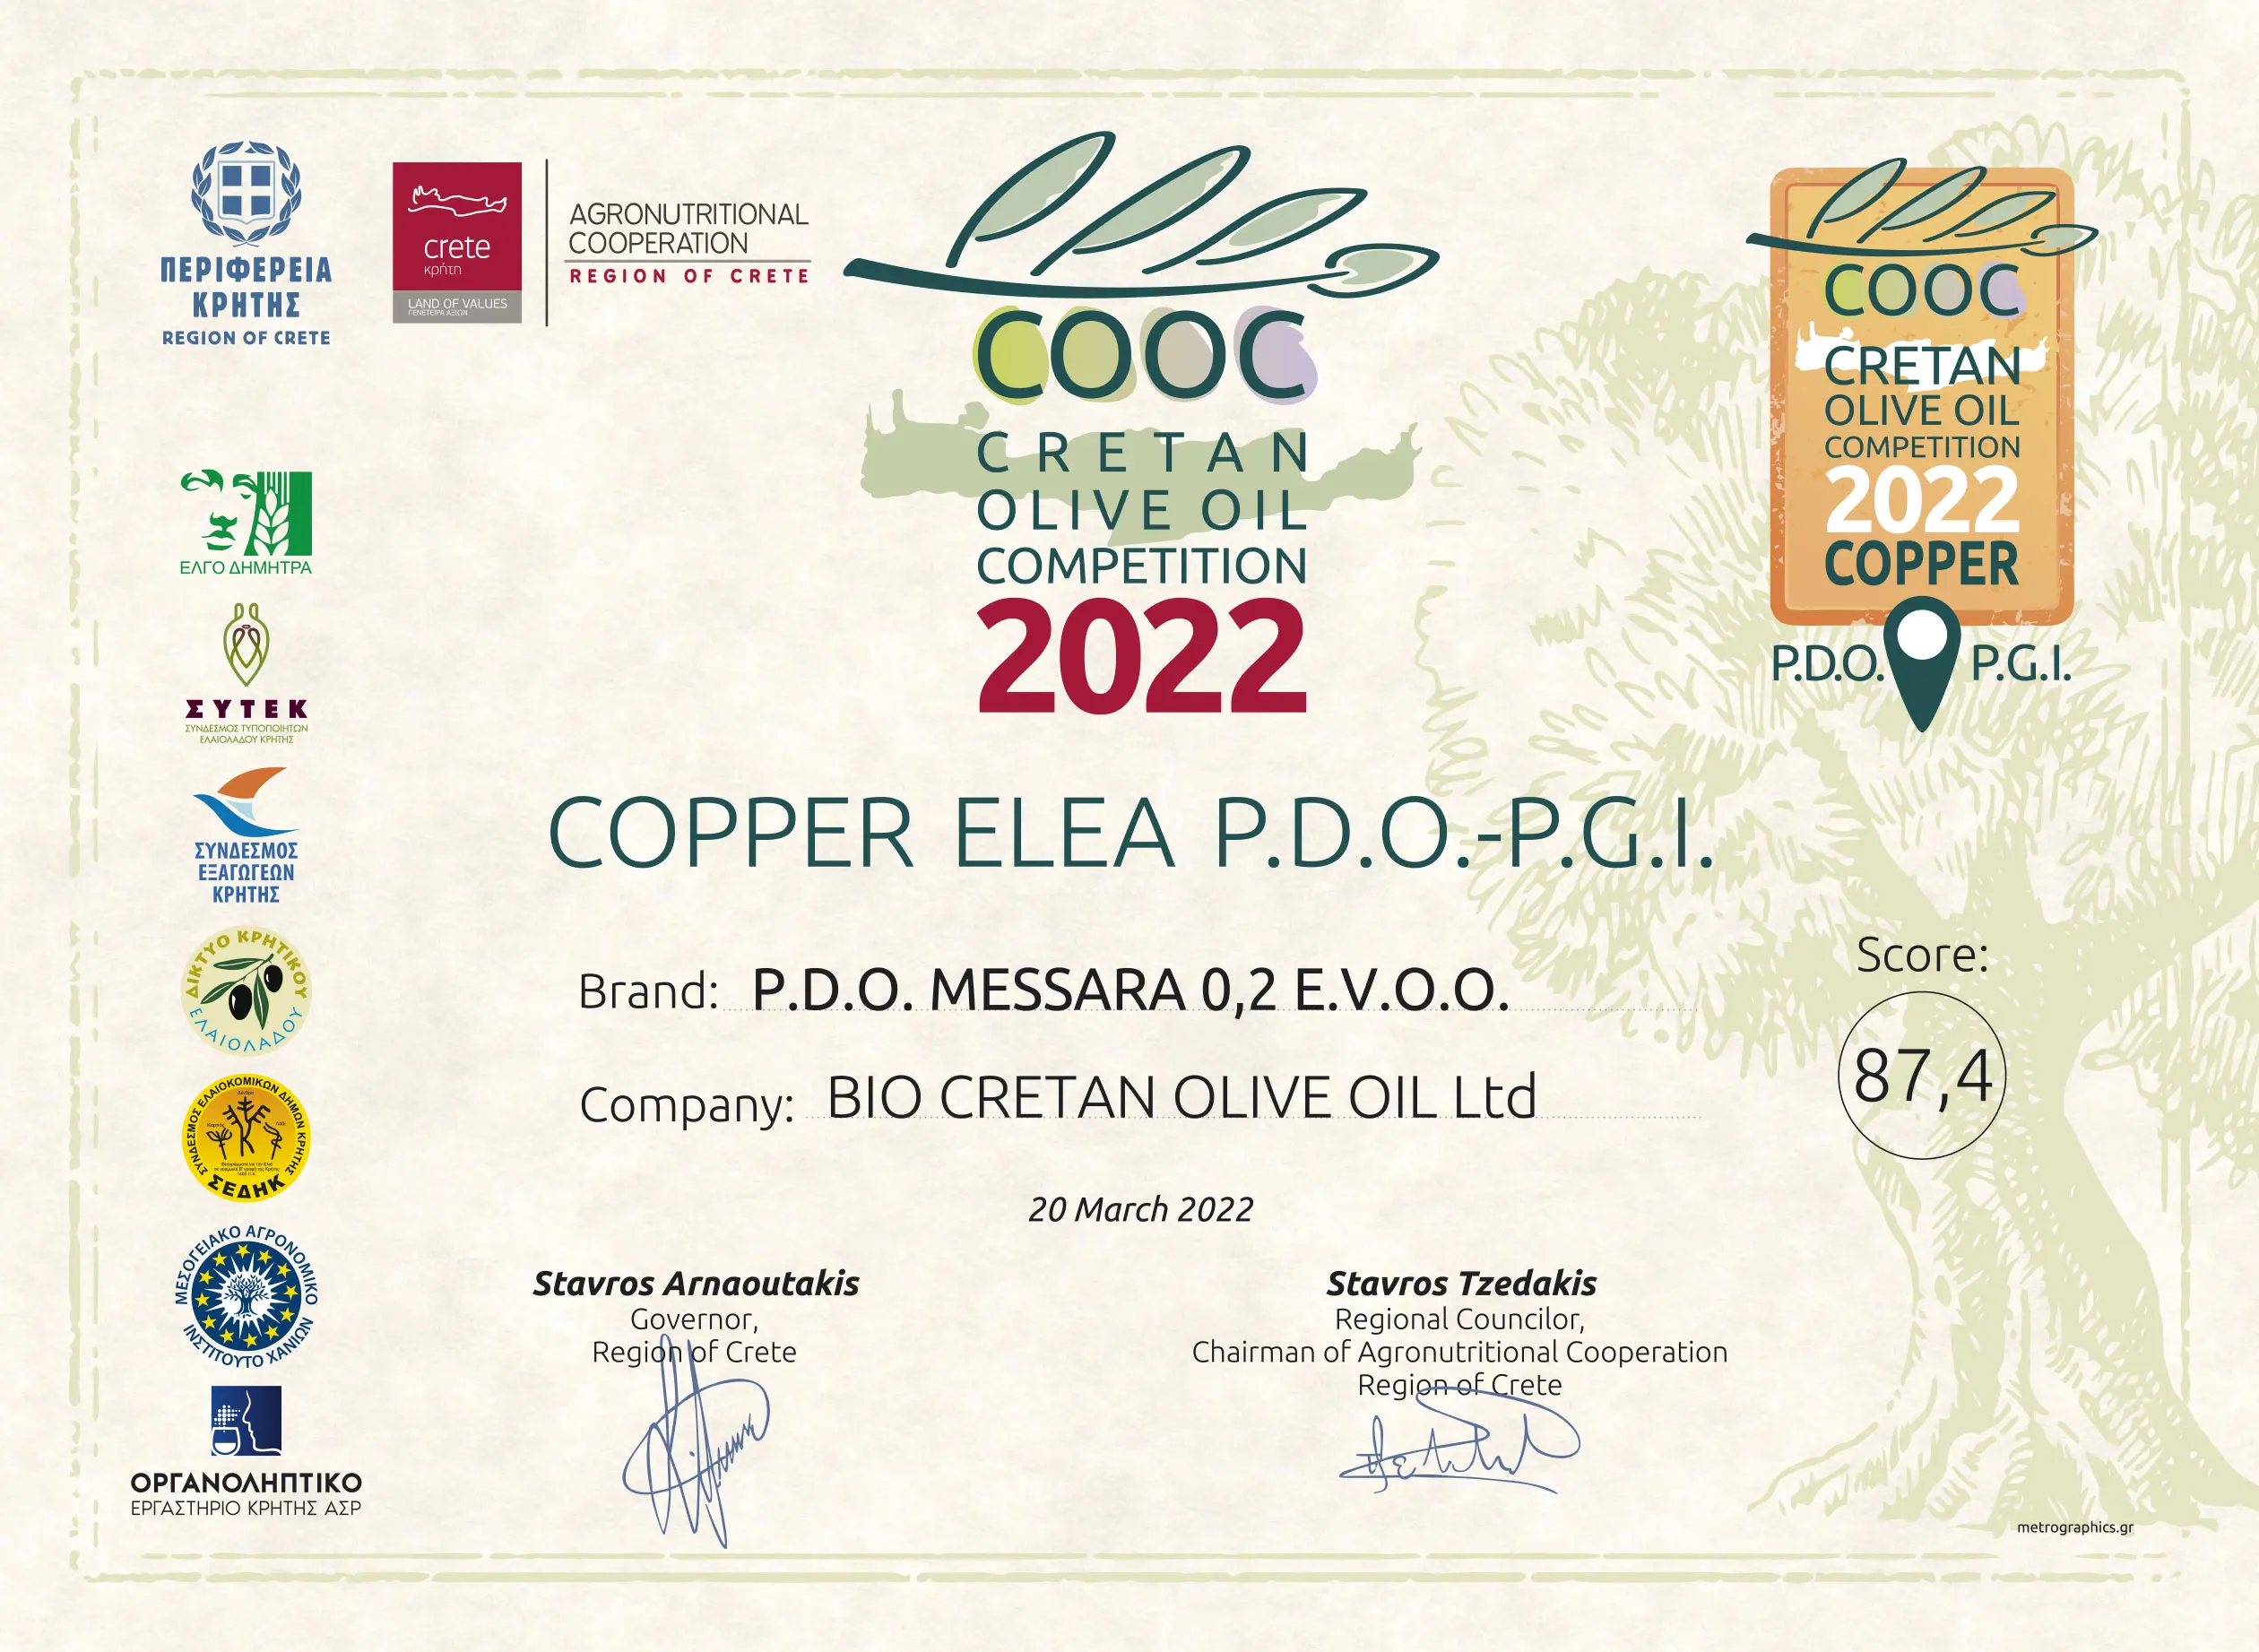 COOC - Concurso de aceite de oliva cretense